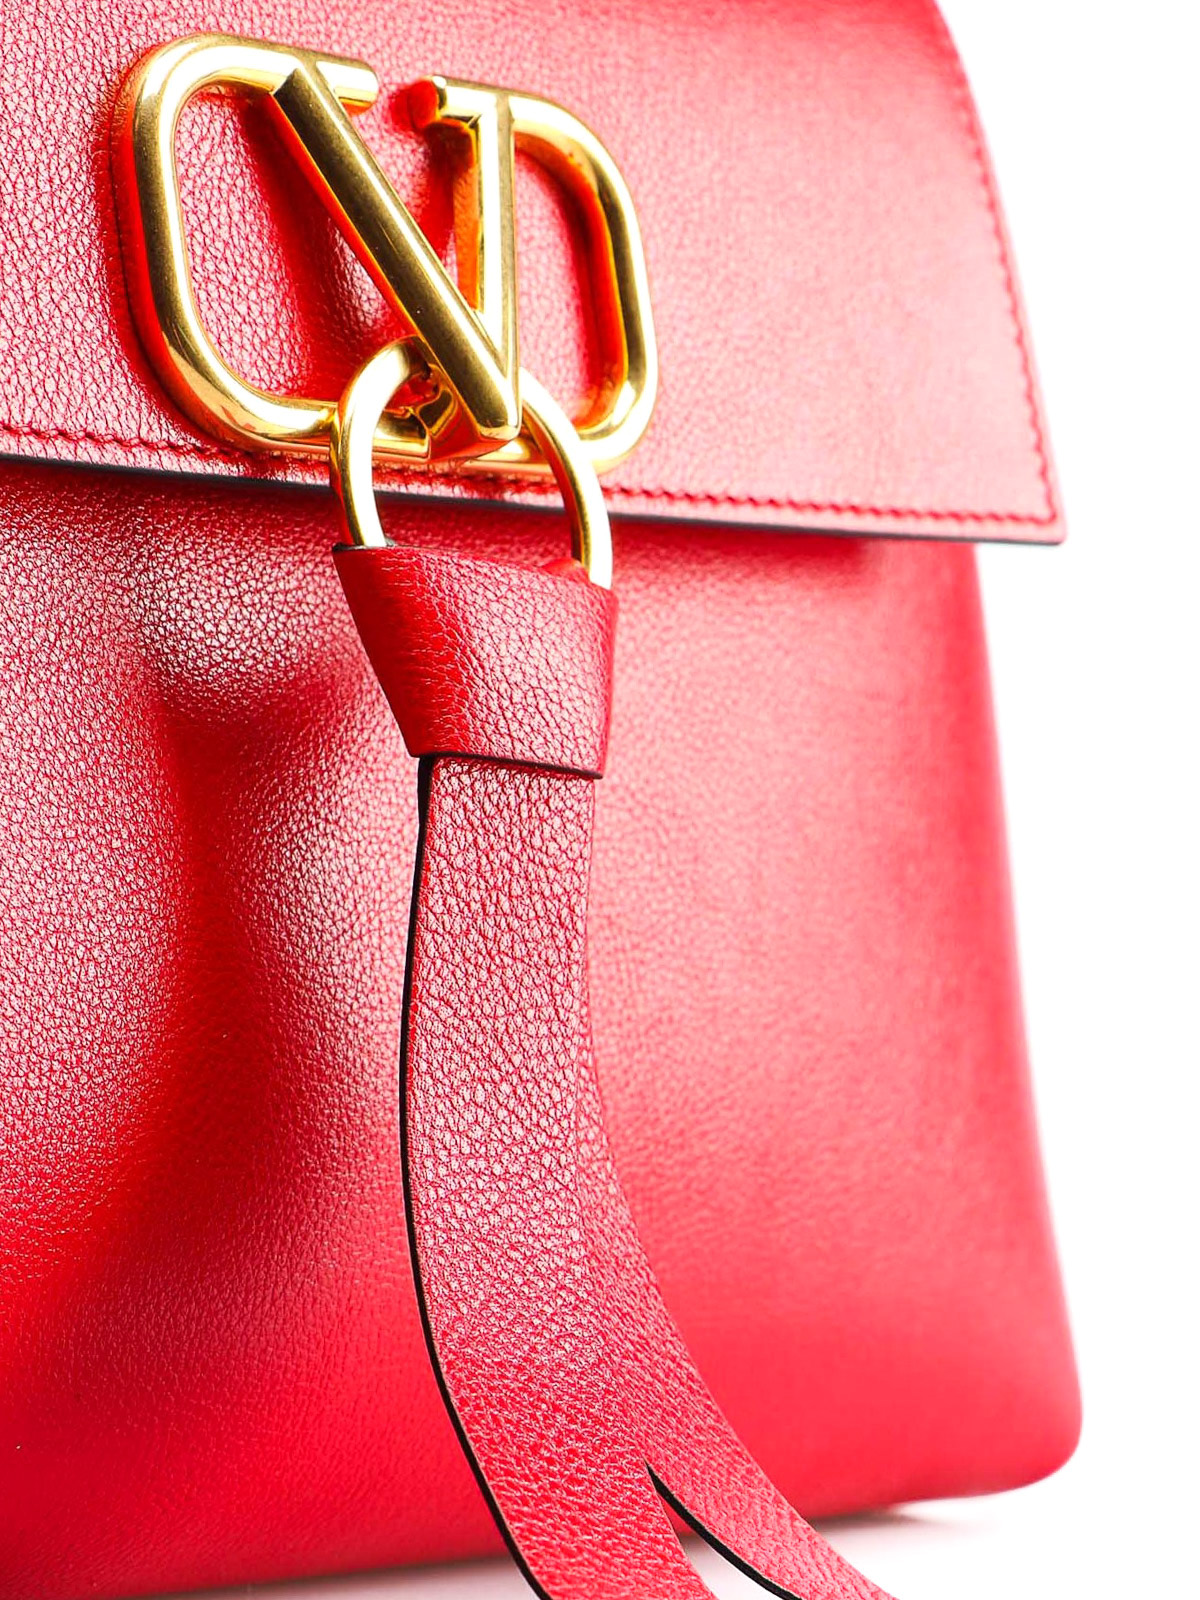 Bowling bags Valentino Garavani - Vring red small handbag - SW2B0E48NKLJU5